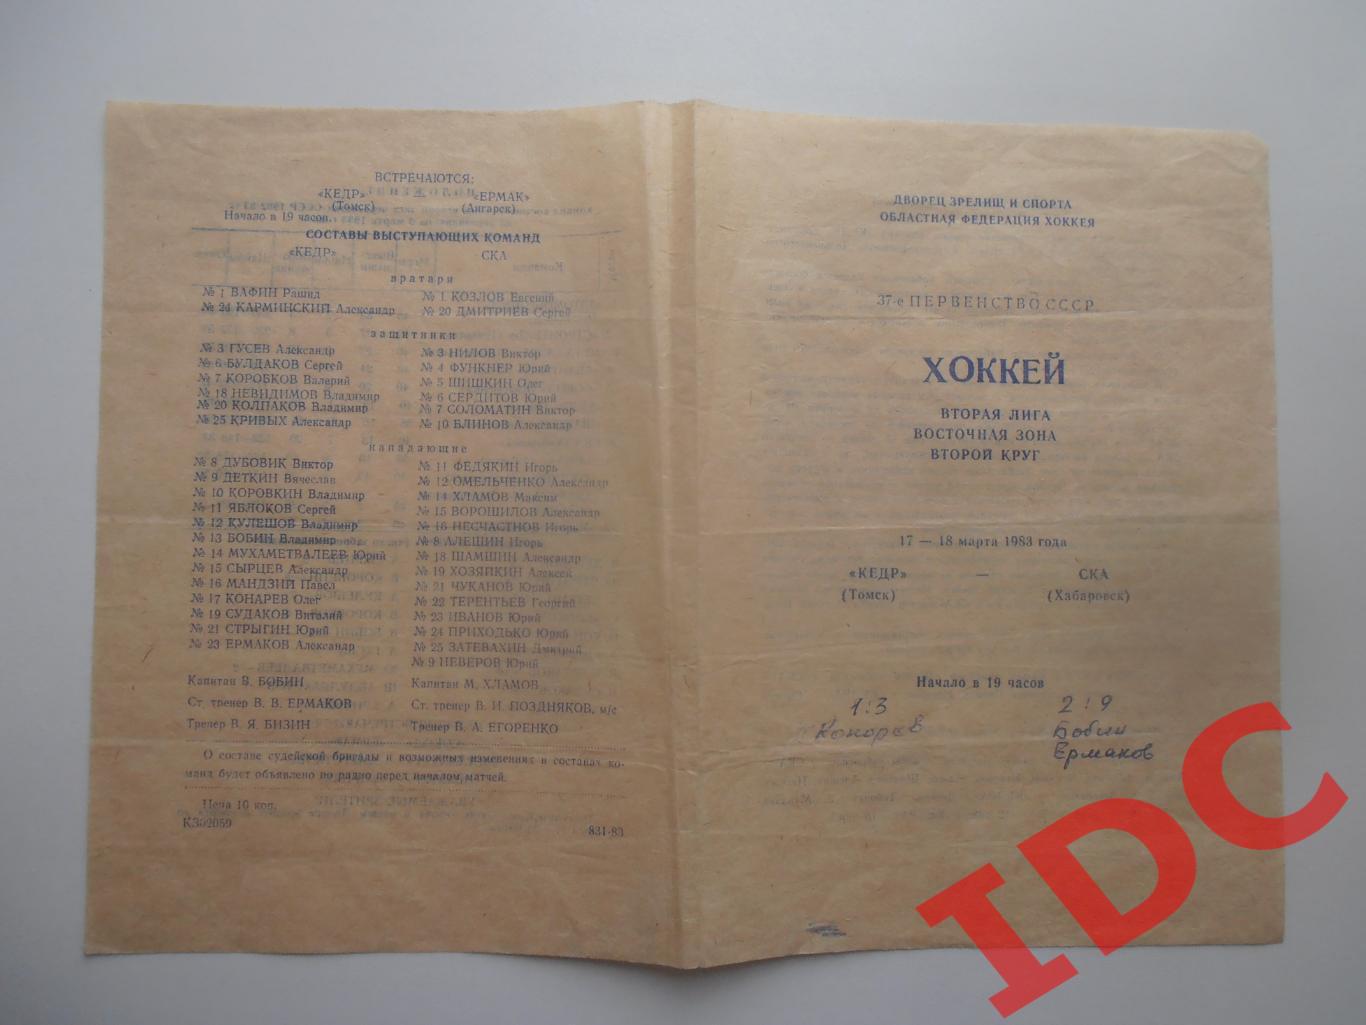 Кедр Томск-СКА Хабаровск 17-18 марта 1983 + 3 отчета